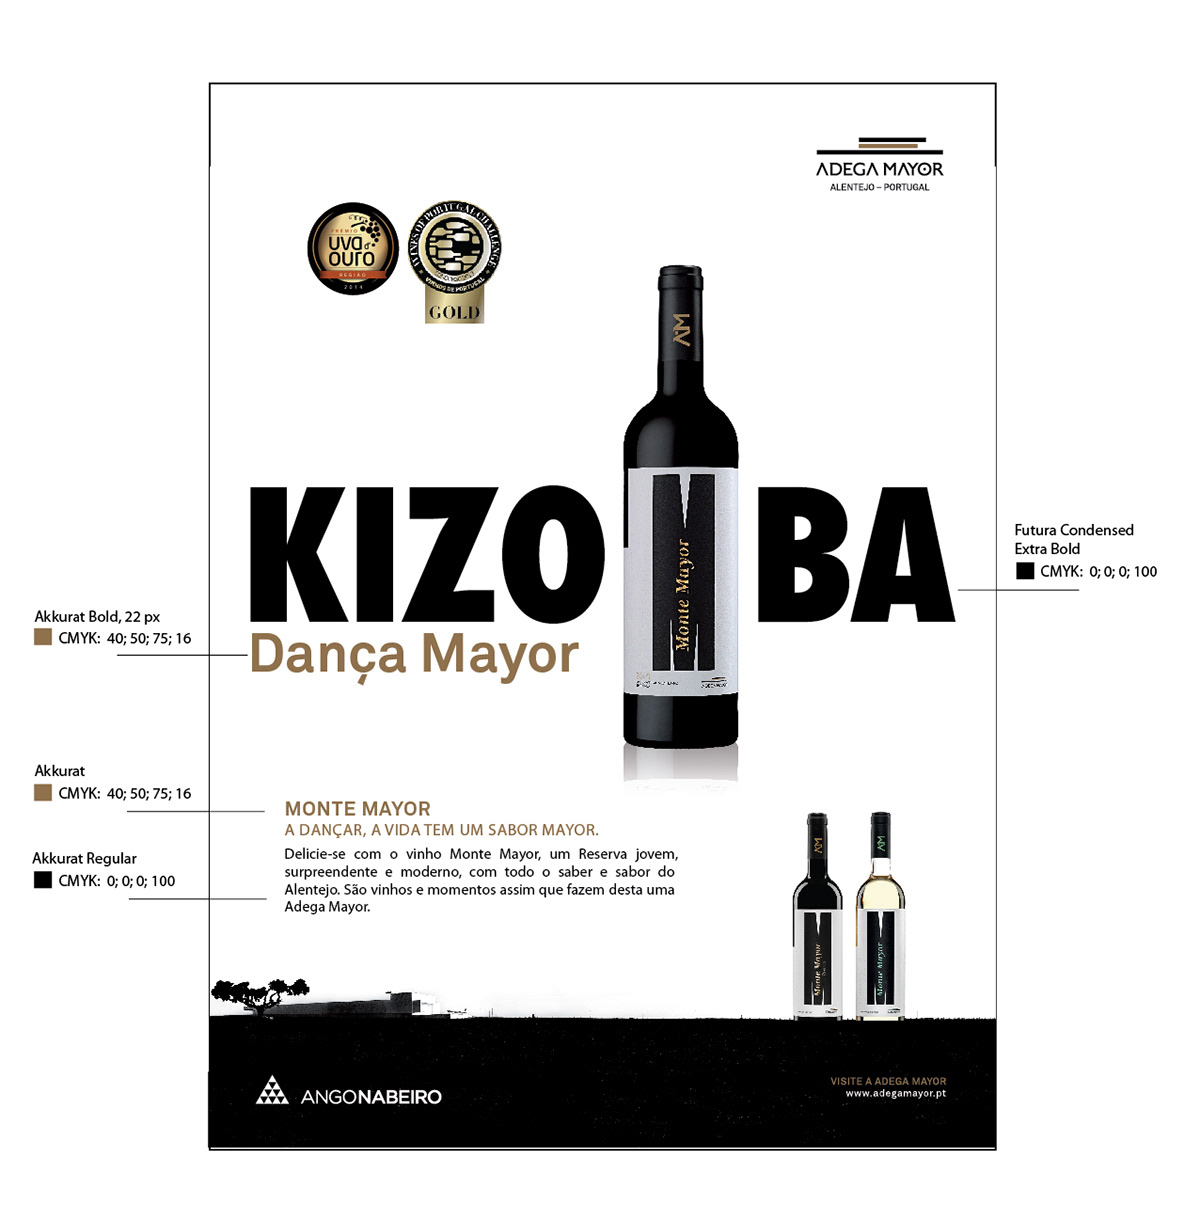 editorial press angola wine